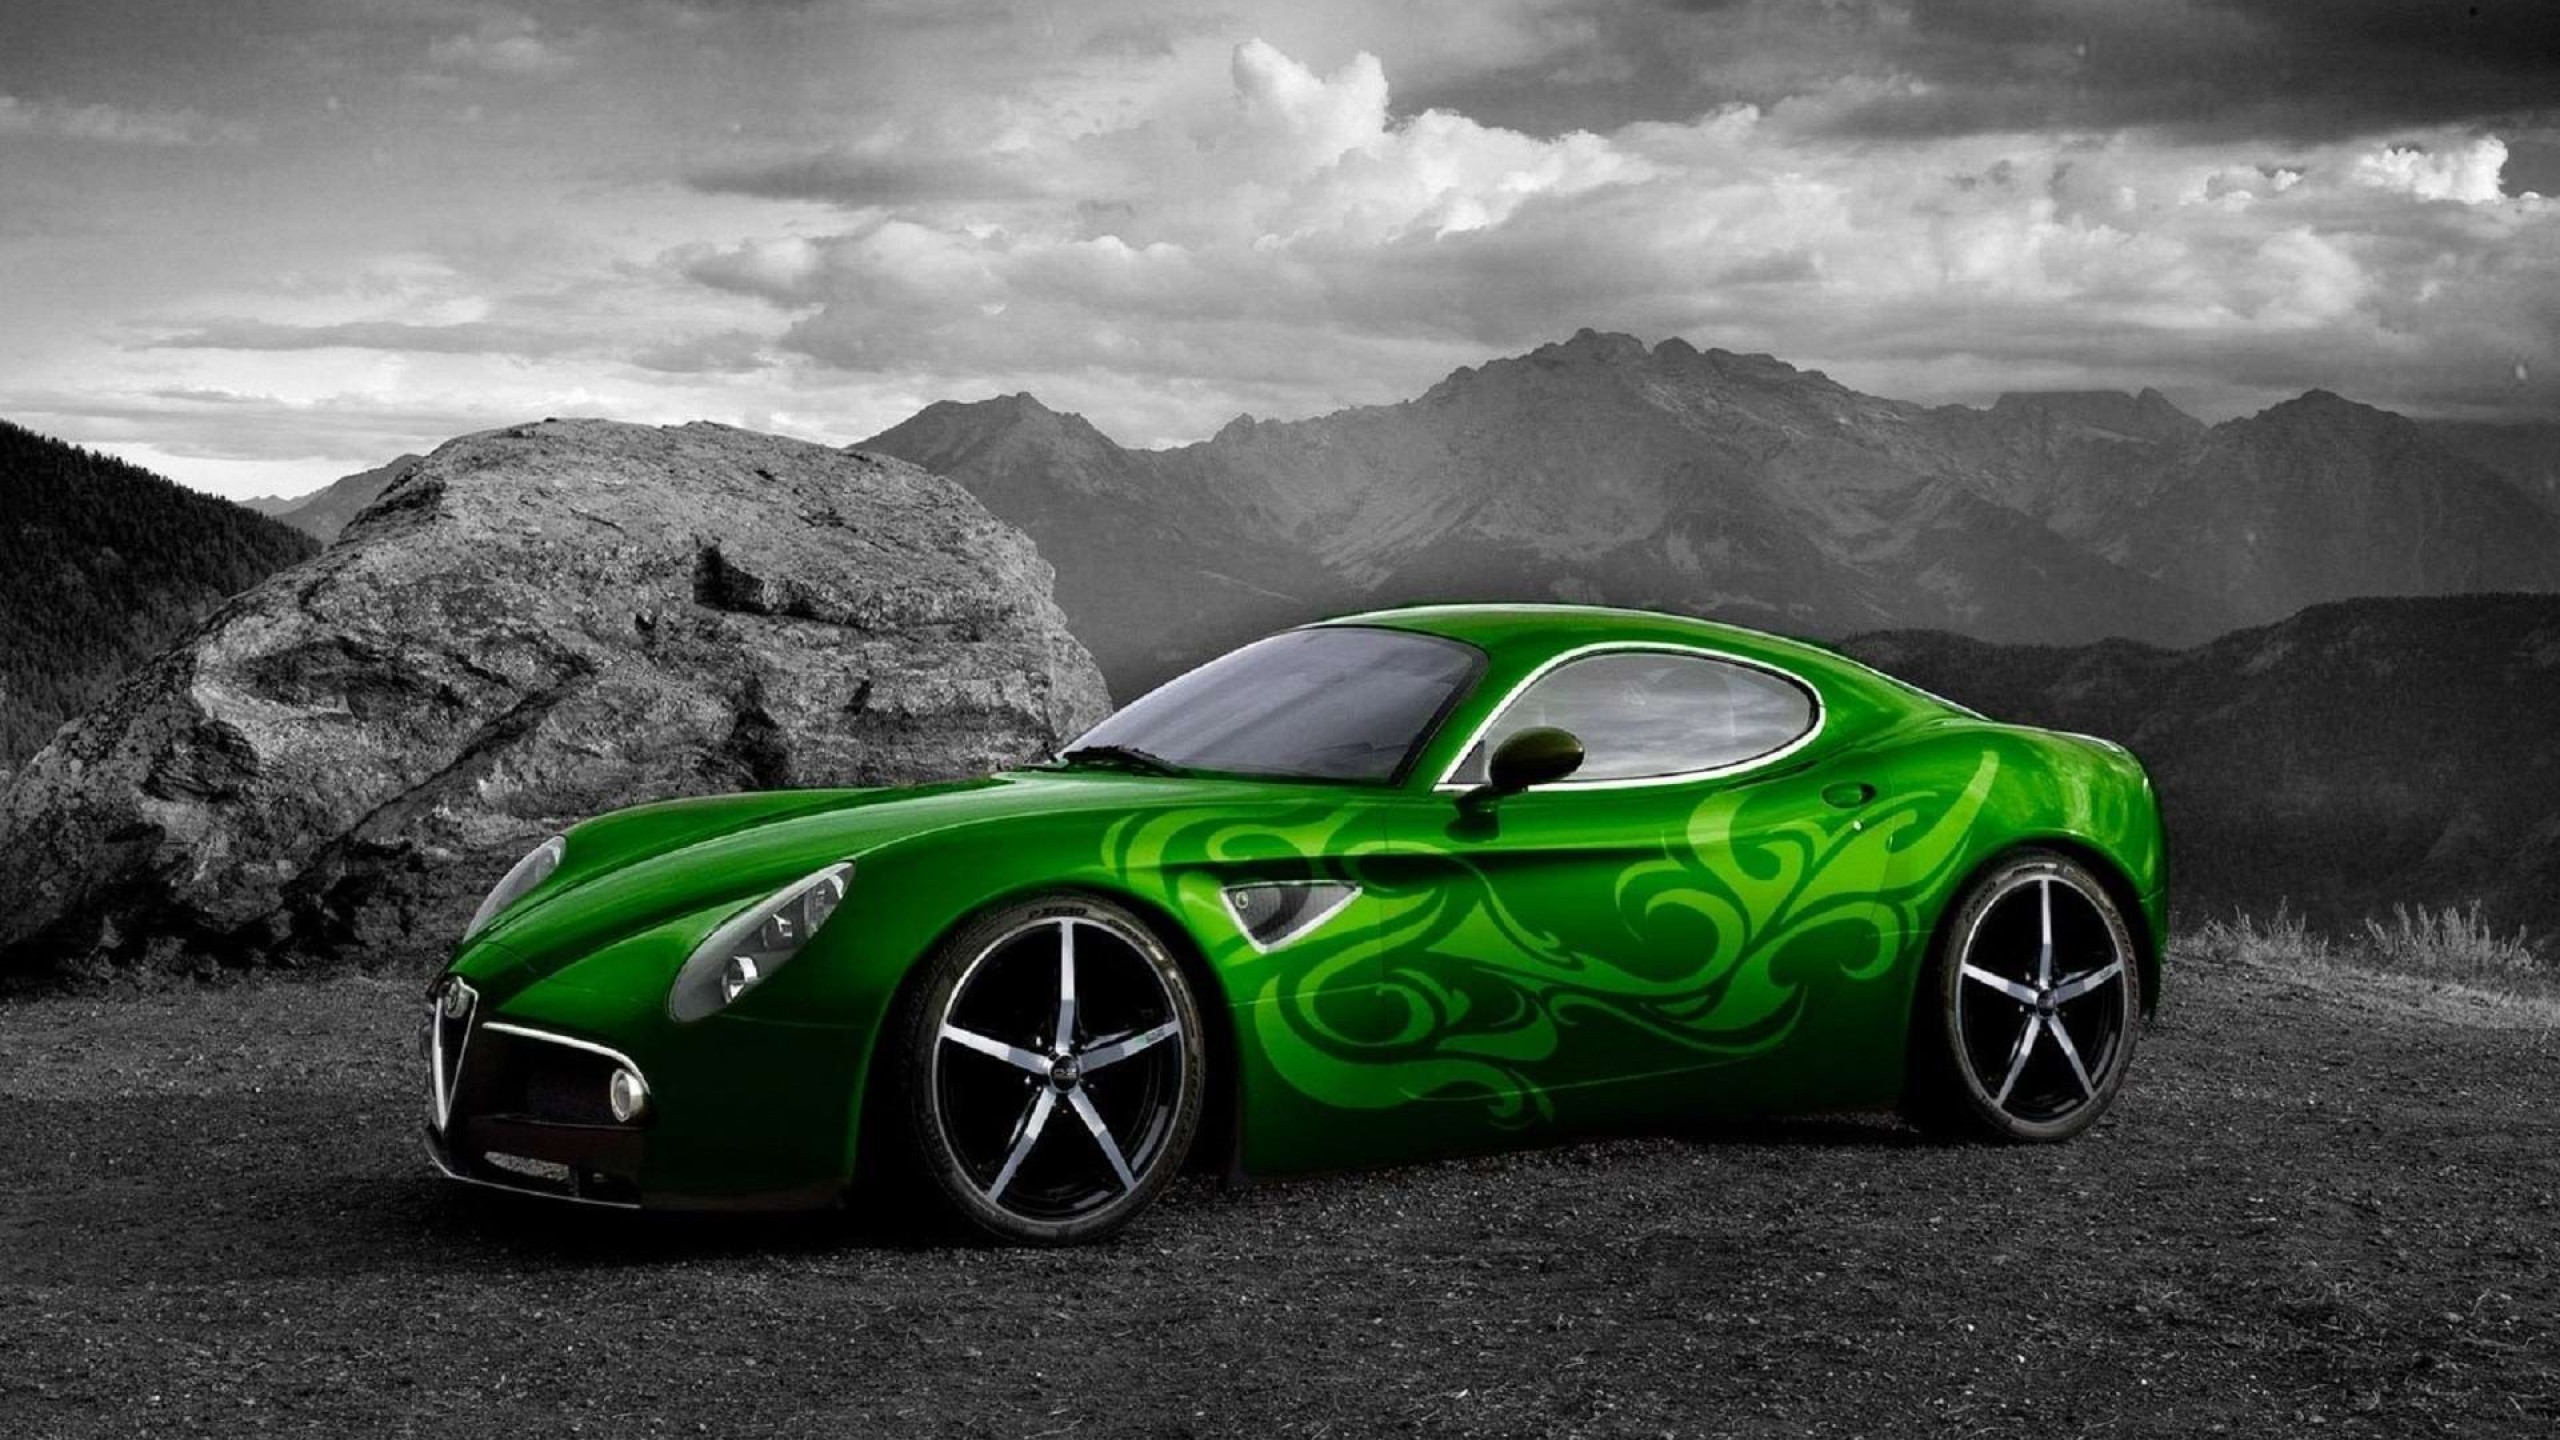 Green Car Background Wallpaper 2560x1440 17020